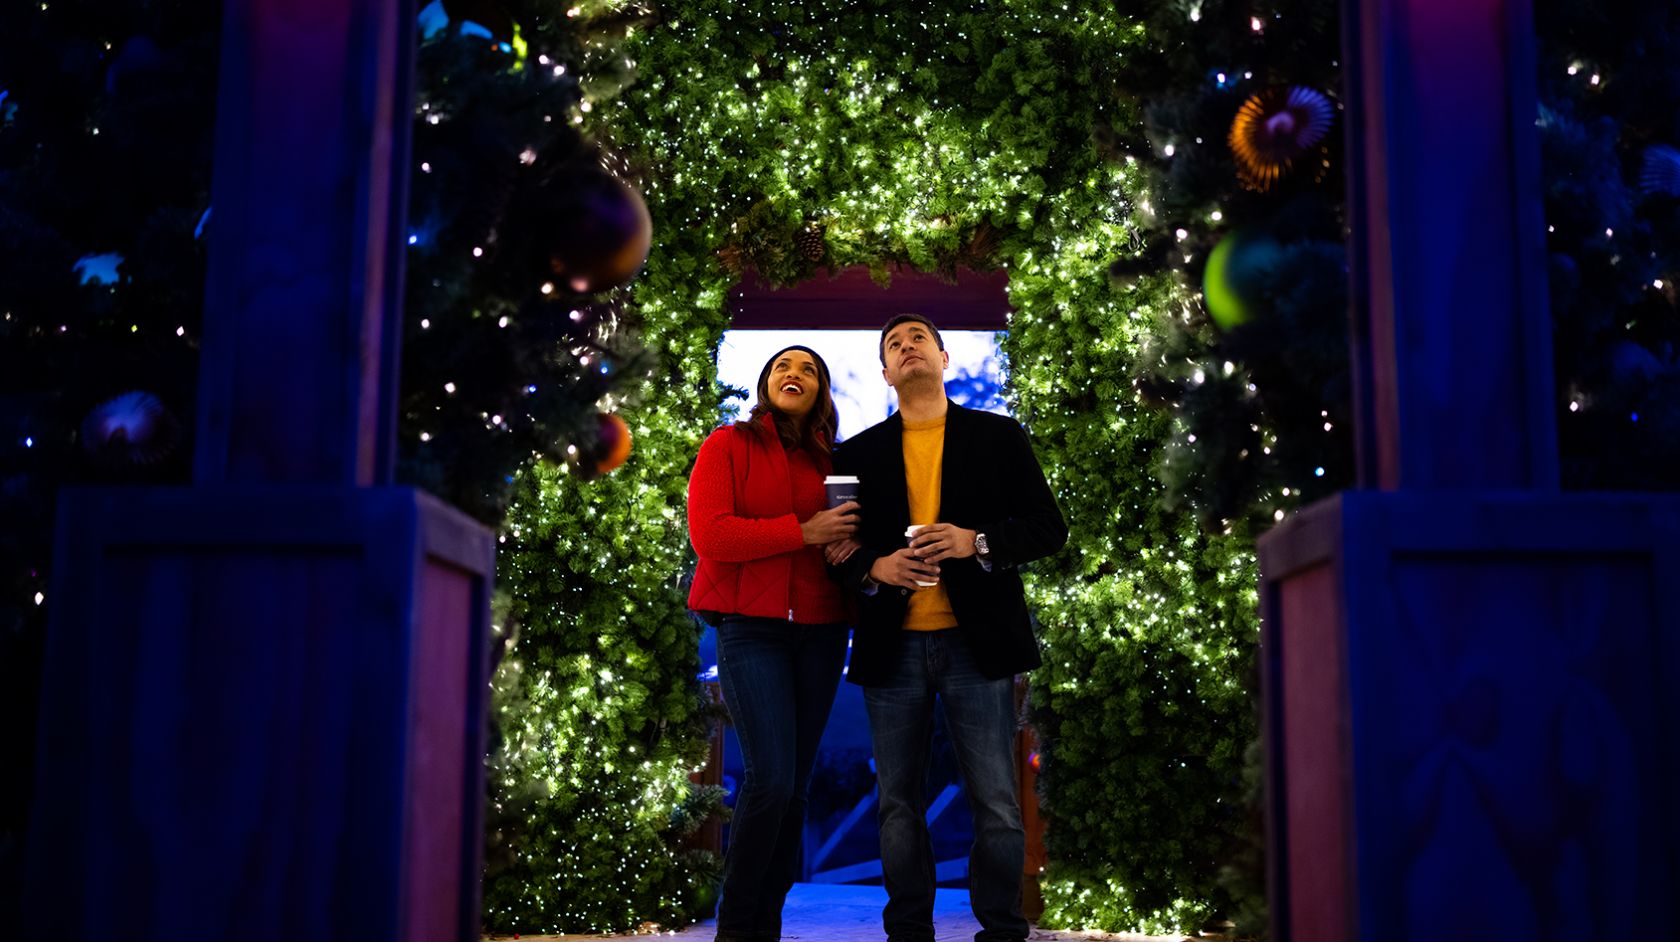 Couple around holiday lights display